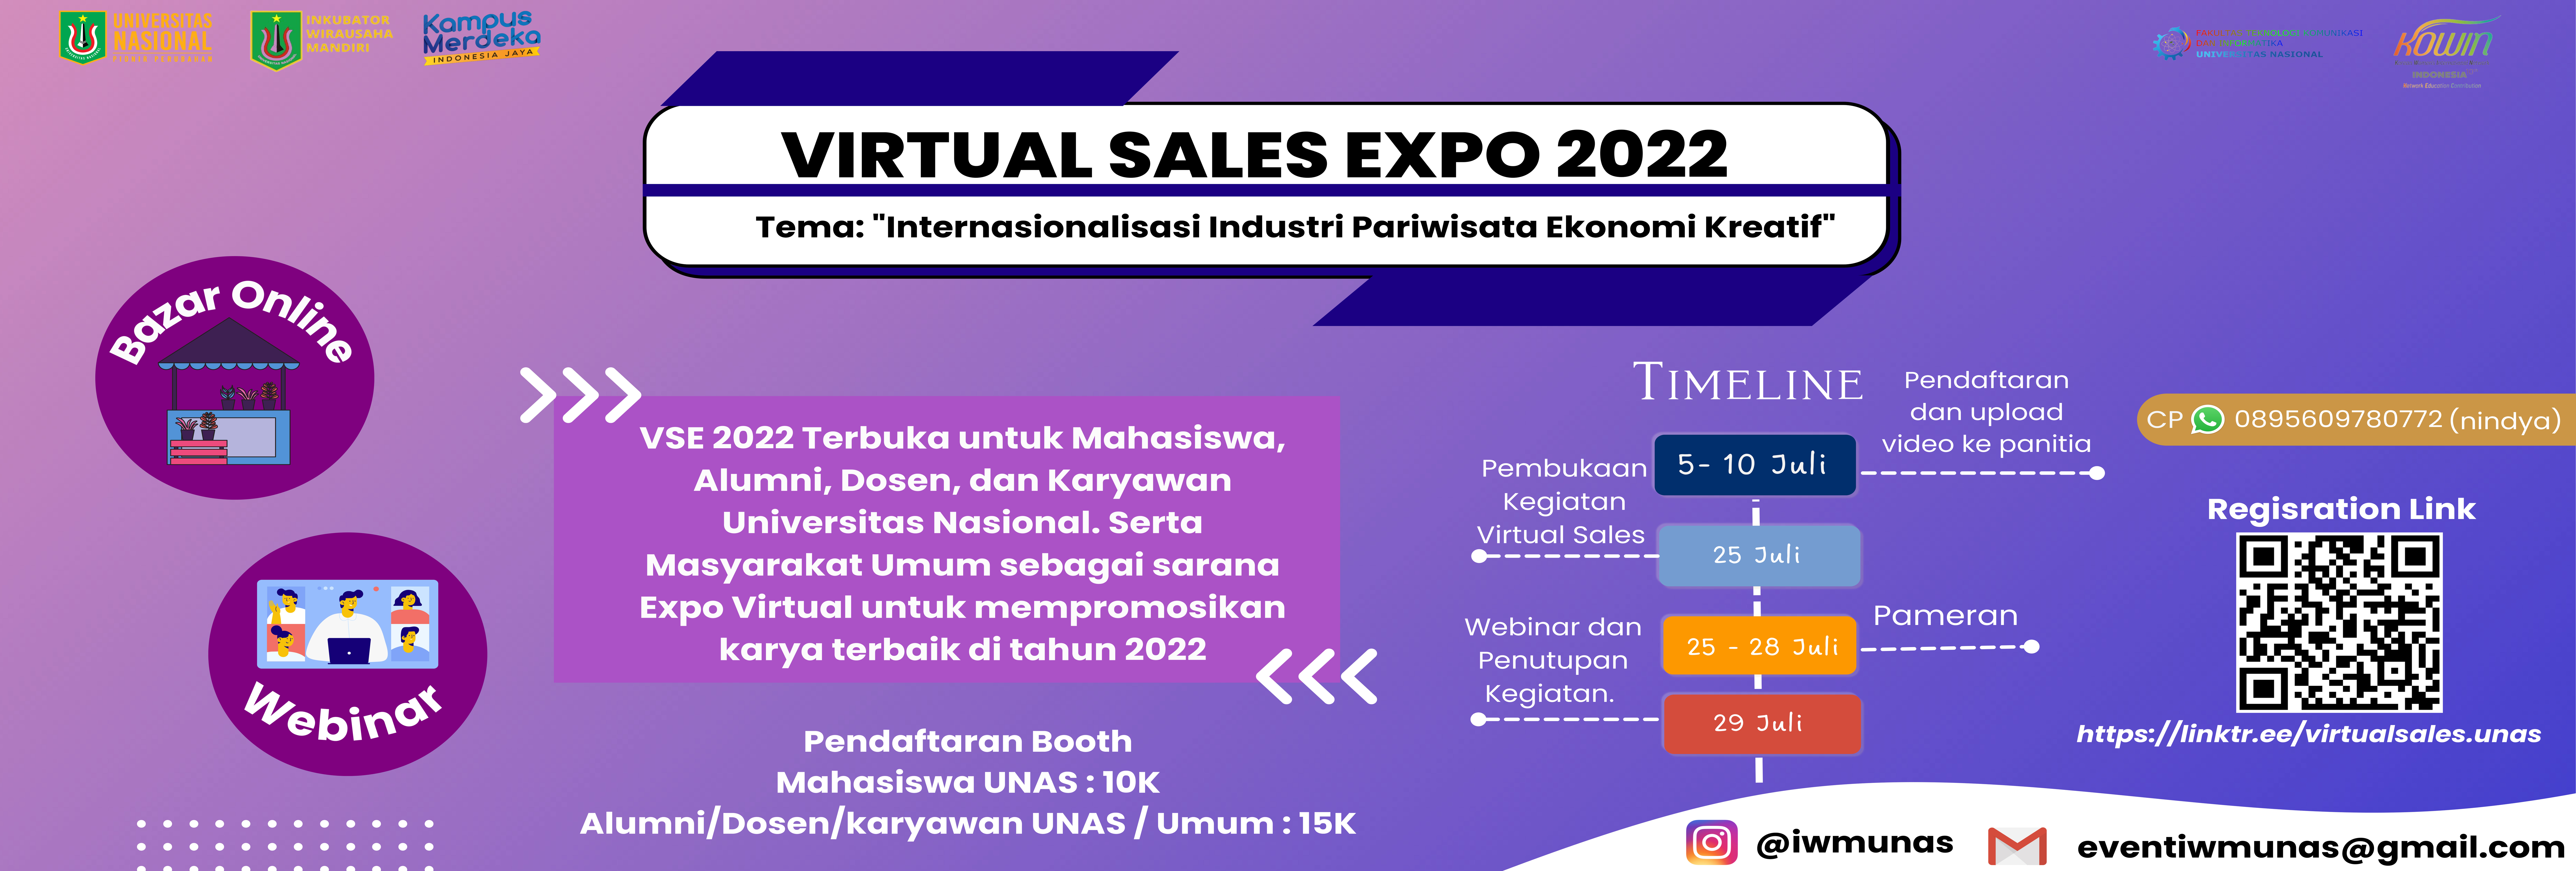 Virtual Sales Expo 2022, Tema: “Internasionalisasi Industri Pariwisata Ekonomi Kreatif”